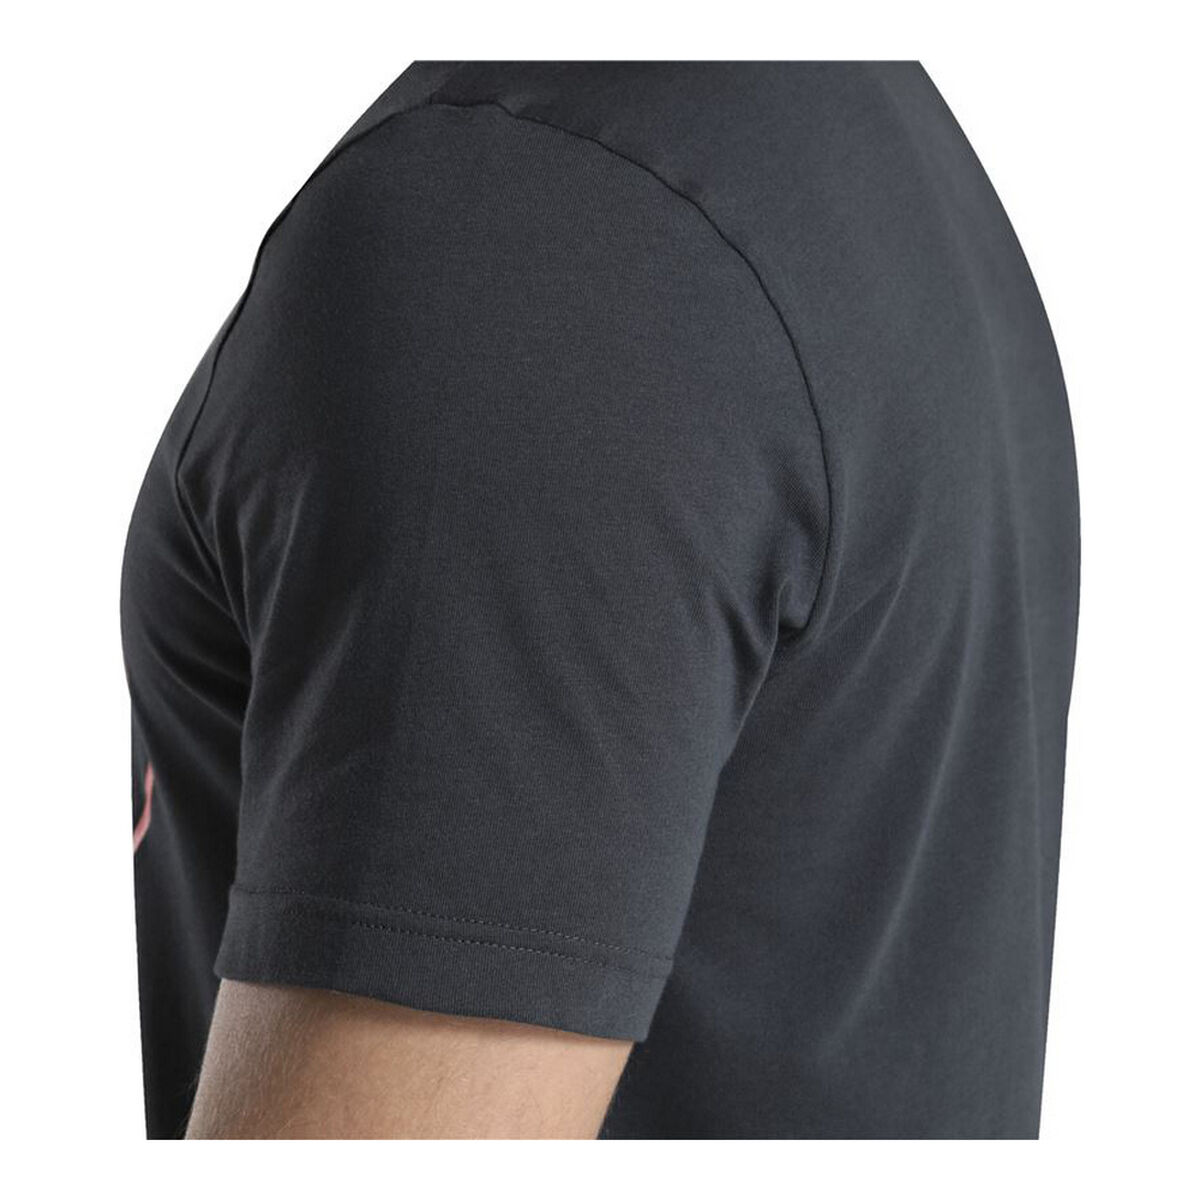 Men’s Short Sleeve T-Shirt Reebok  Classic Trail Black